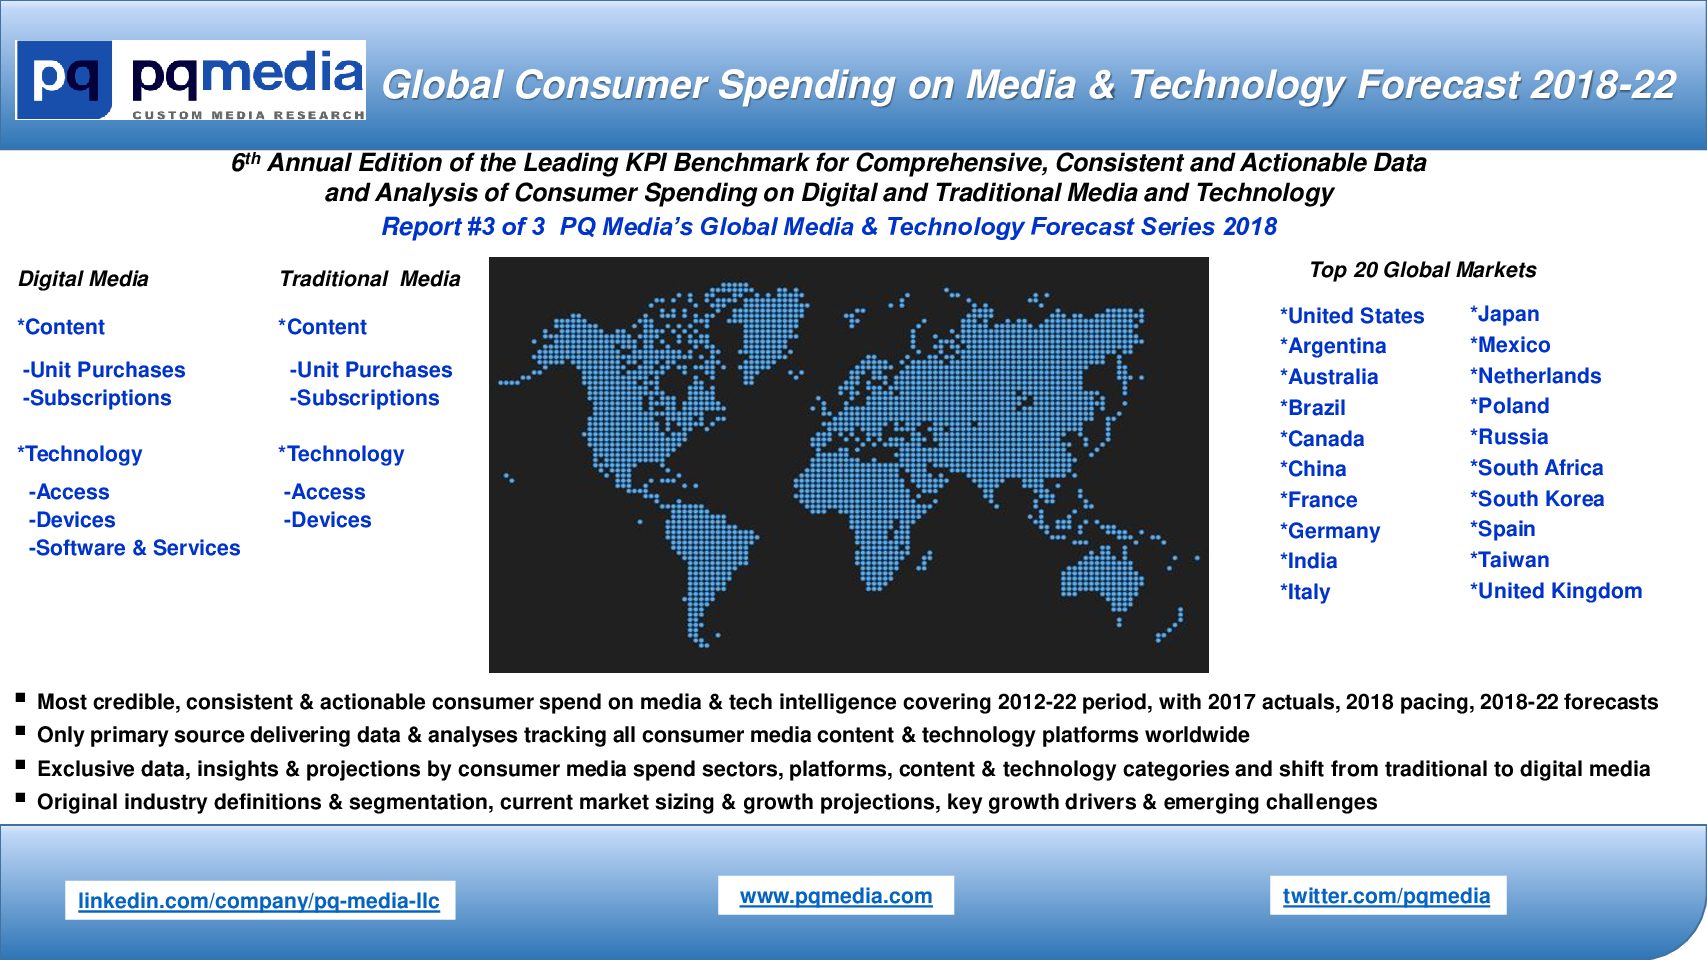 Global Consumer Spending on Media Content & Technology Forecast 2018-22